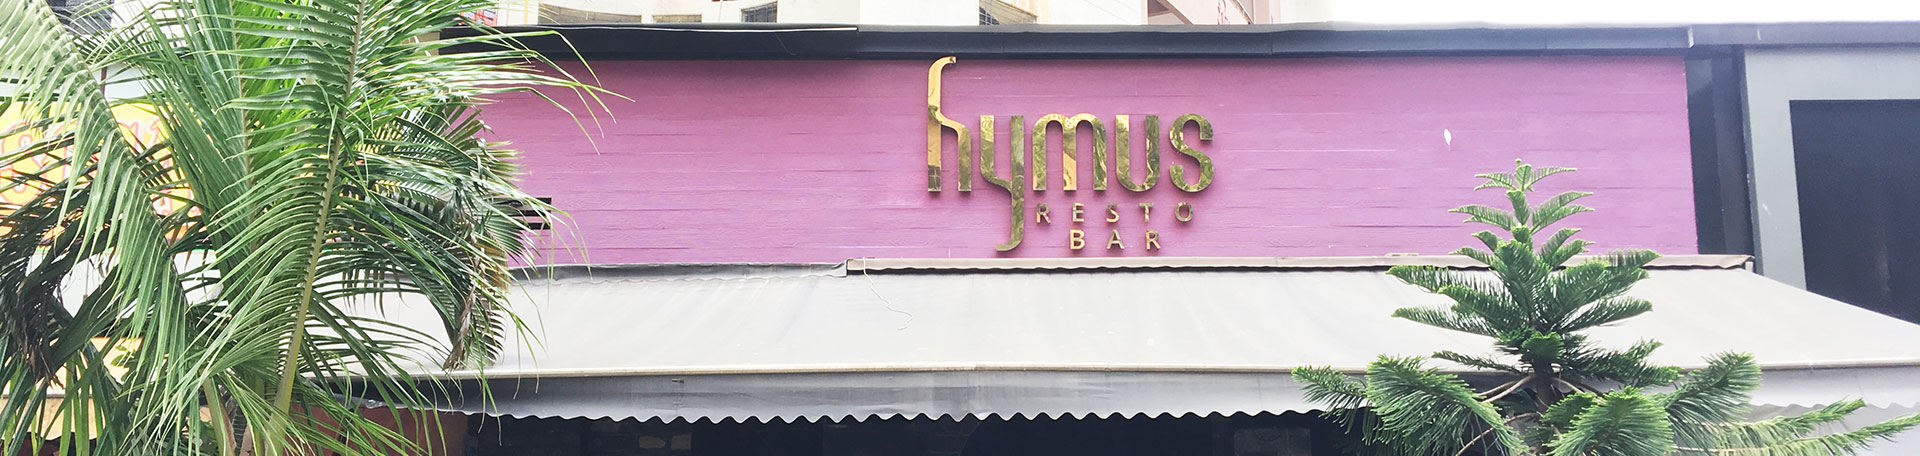 Case Study on Hymus Restobar by a Restaurant Branding Agency